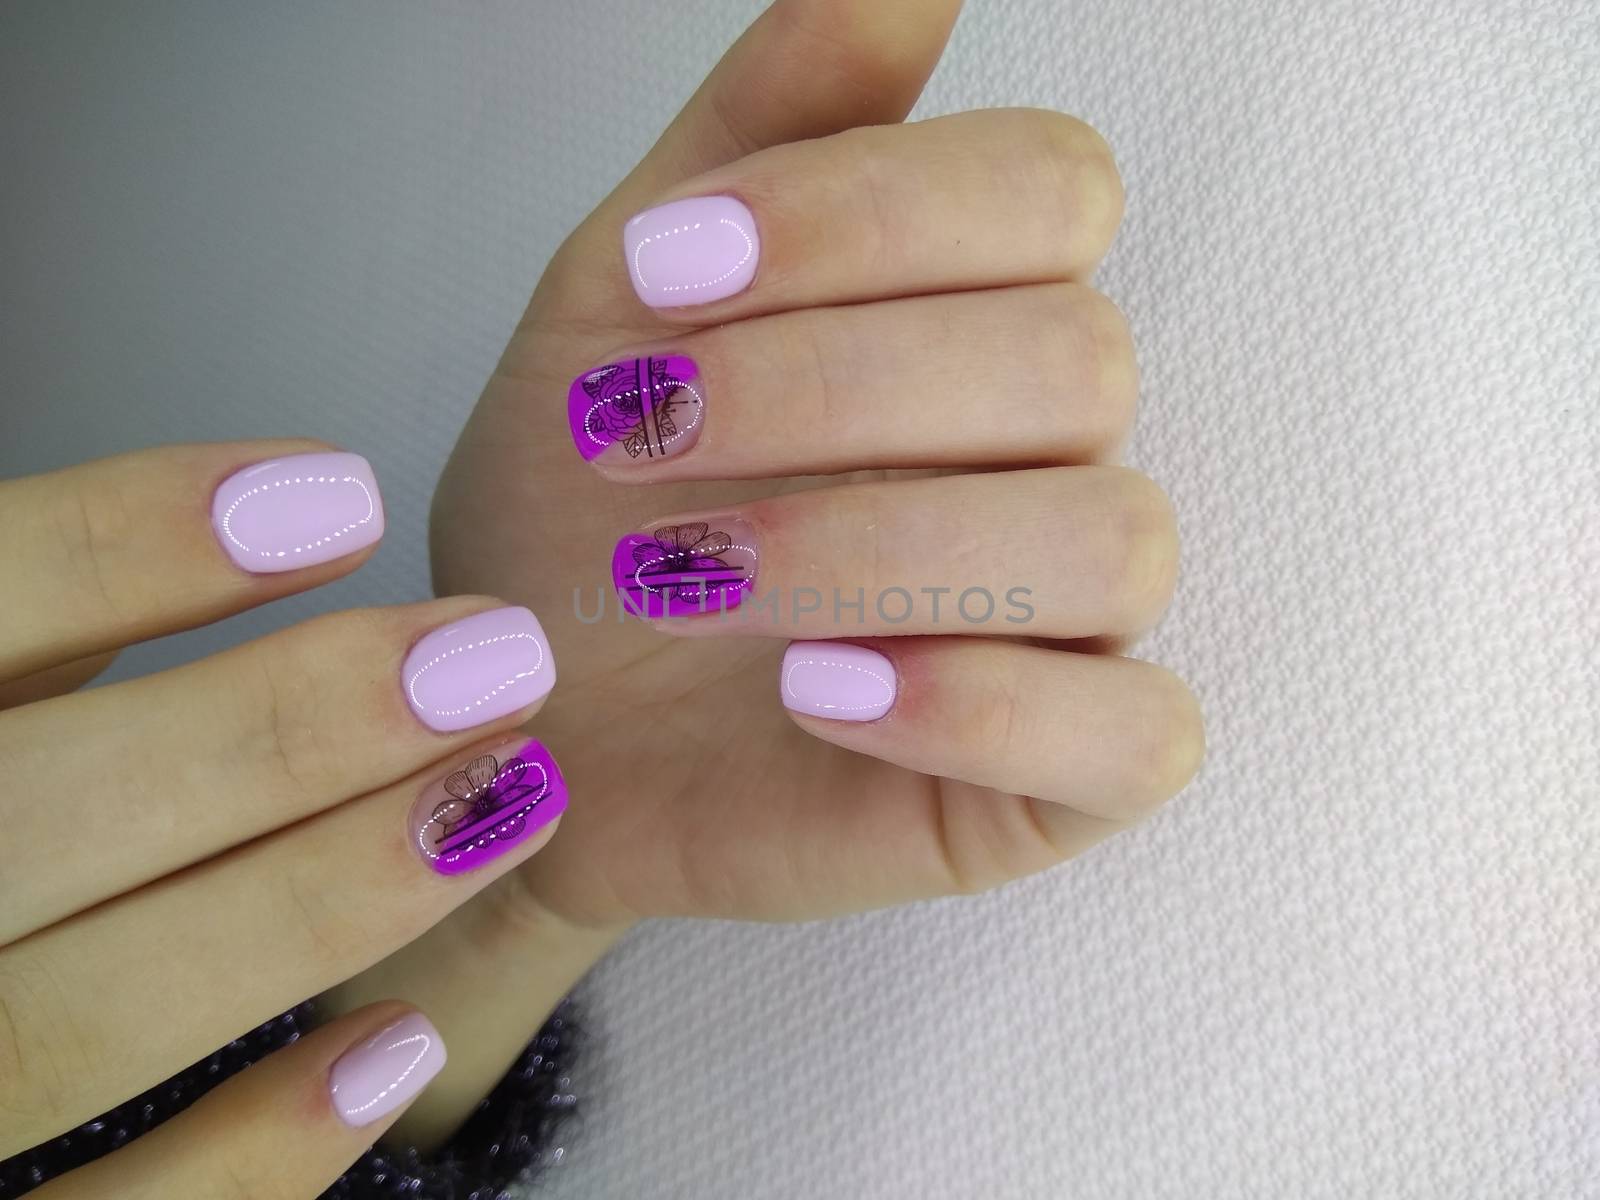 stylish design of manicure on long beautiful nails by SmirMaxStock